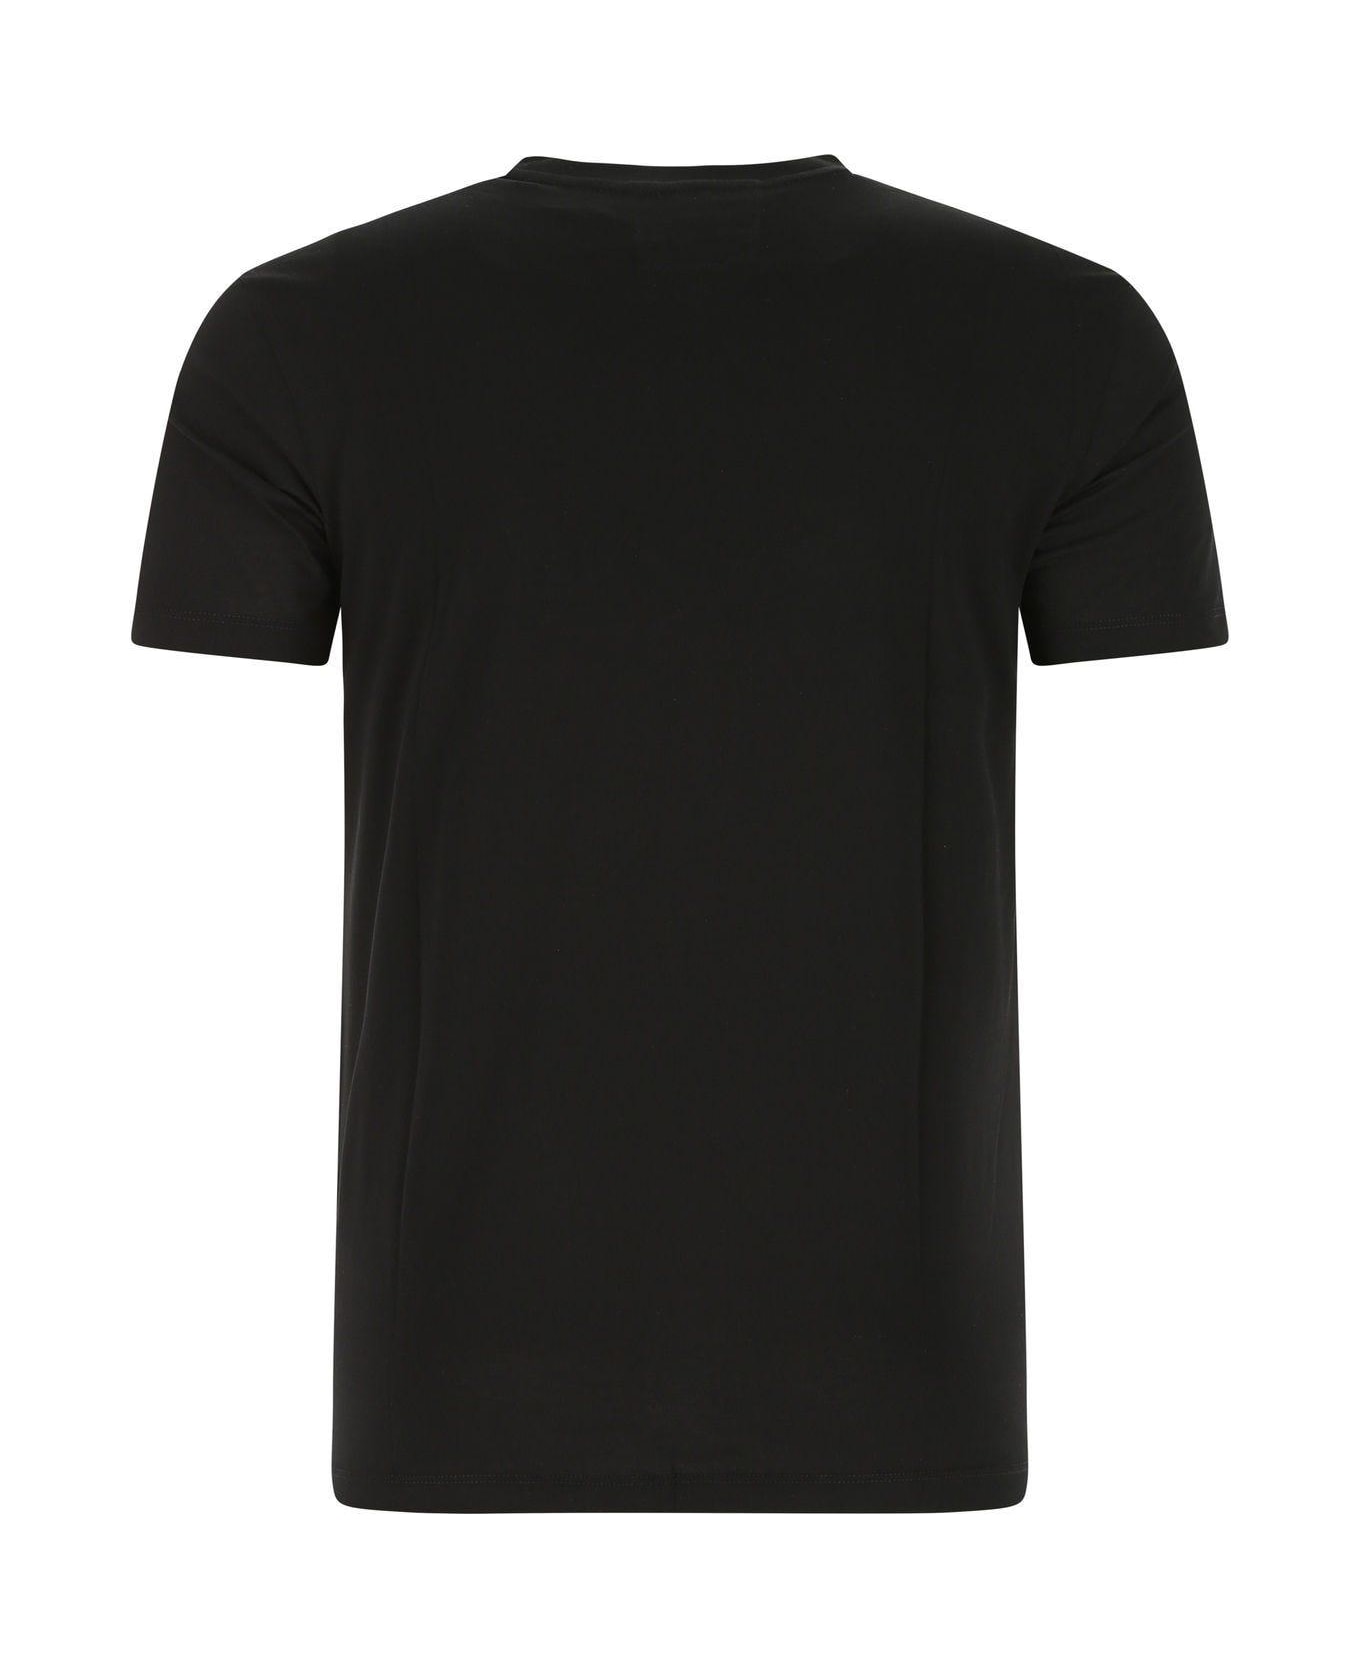 Emporio Armani Black Cotton T-shirt - Black